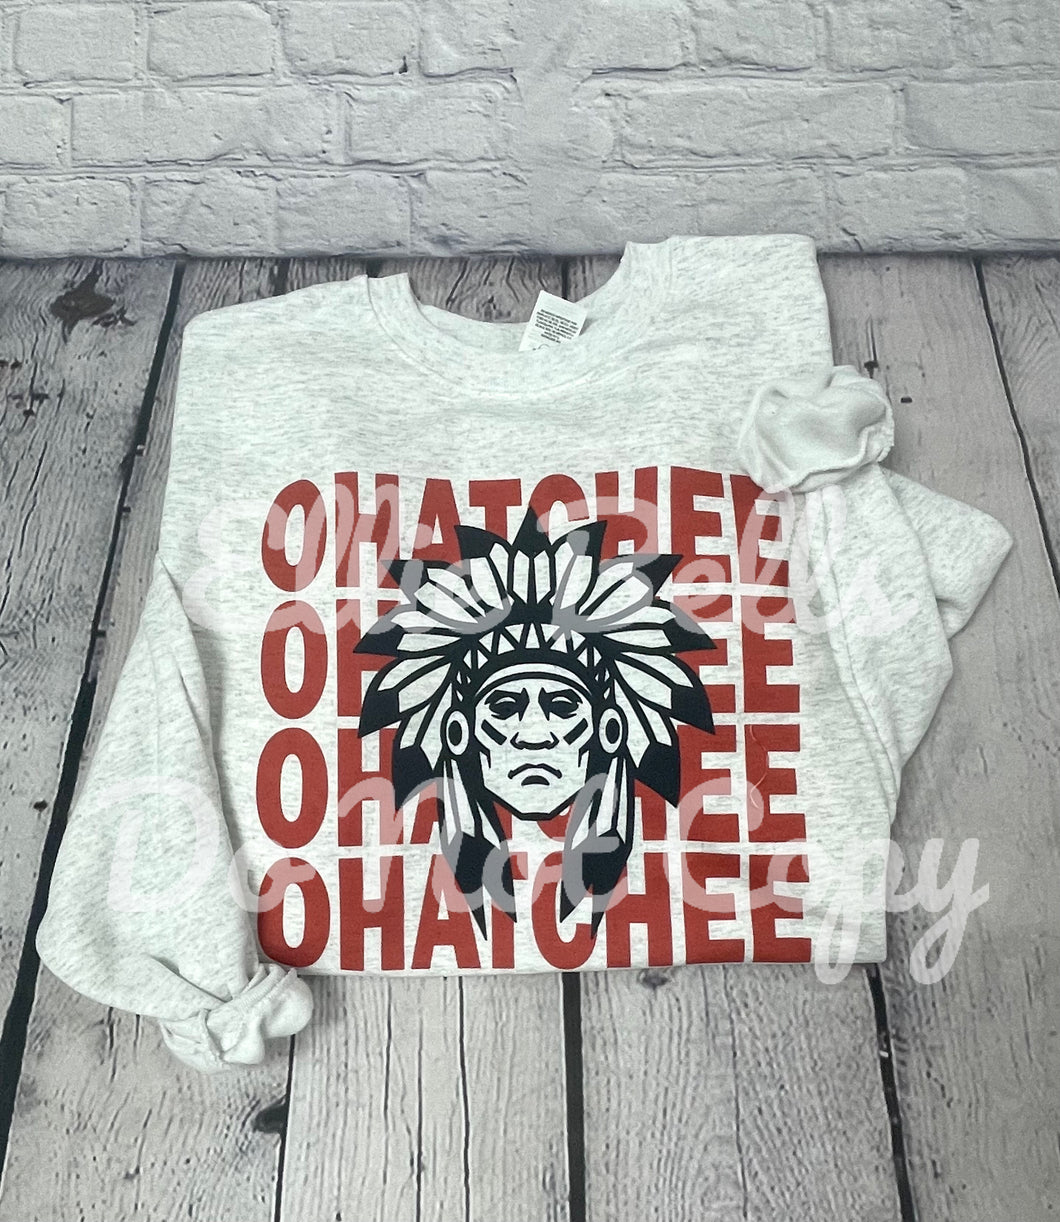 Ohatchee Mascot T-shirt or Sweatshirt